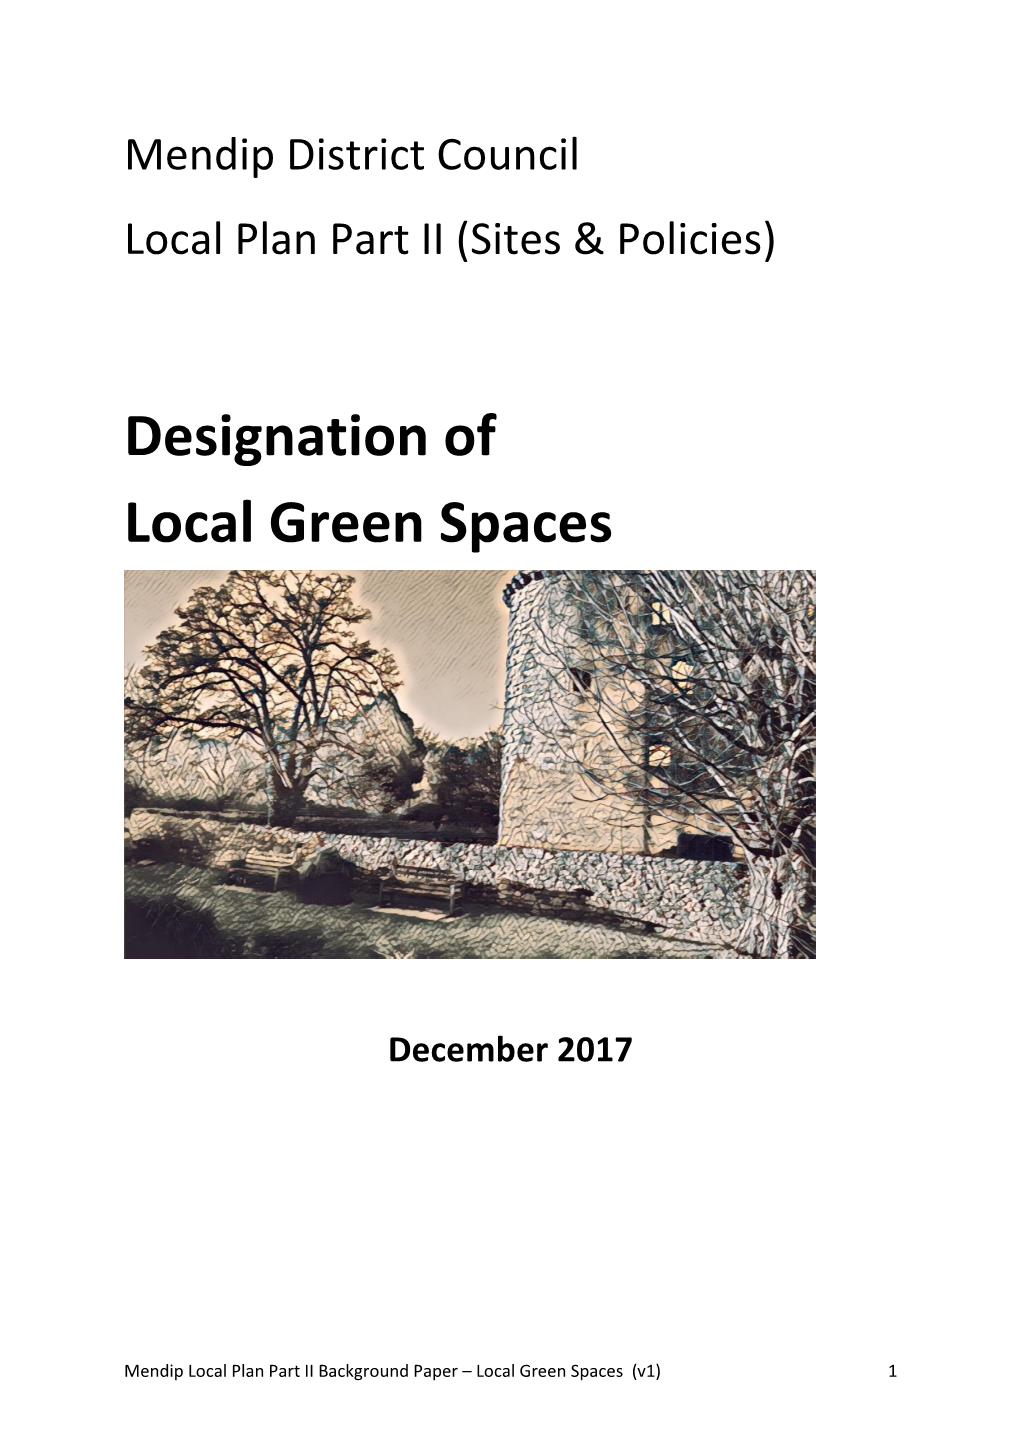 Designation of Local Green Spaces